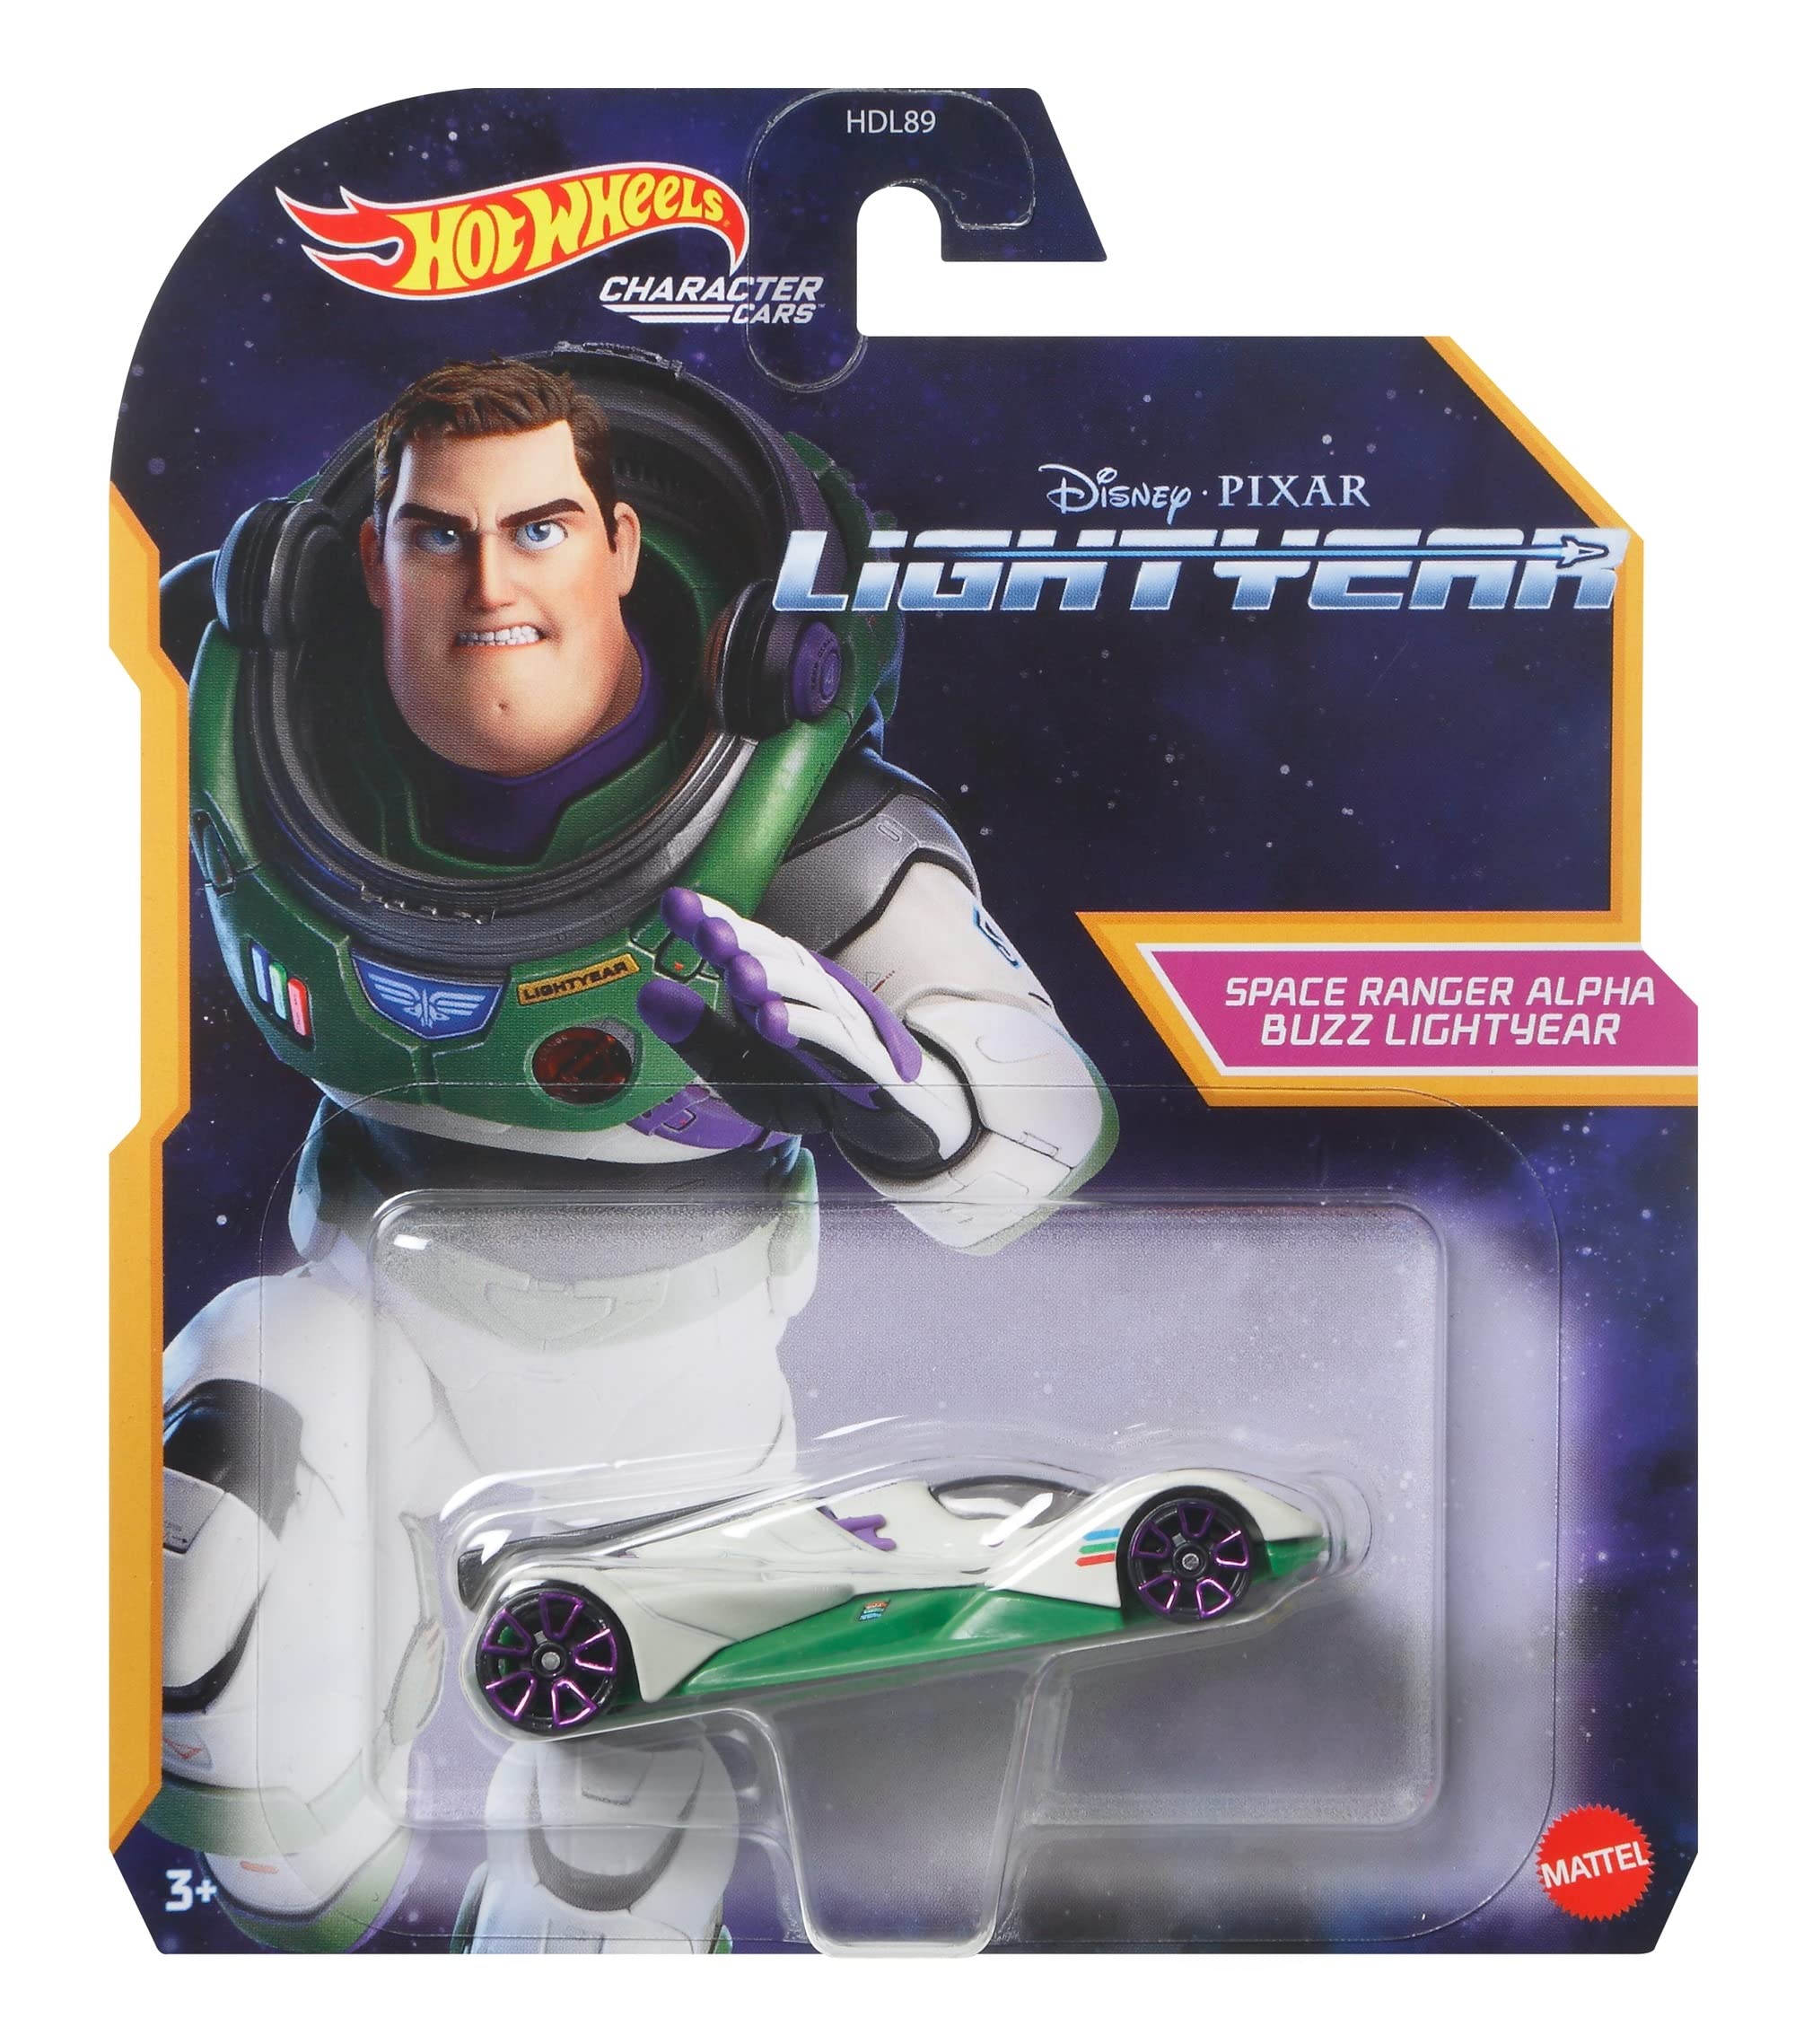 Mattel-Hot Wheels Lightyear Character Cars - Space Ranger Alpha Buzz Lightyear-HDL90-Legacy Toys